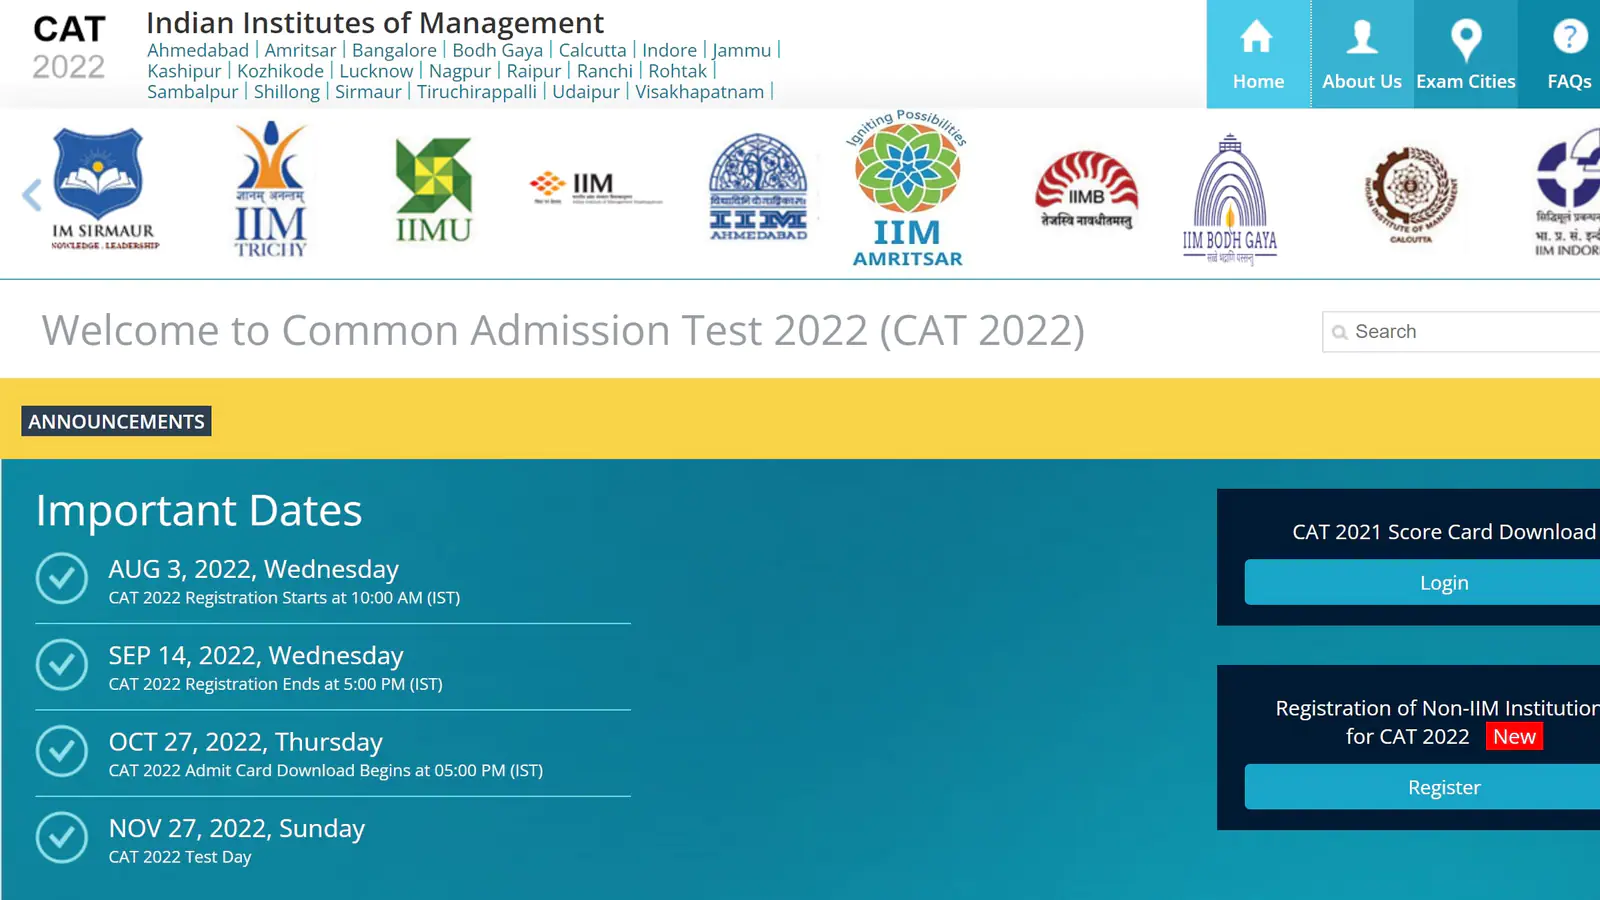 IIM CAT 2022 application process begins tomorrow at iimcat.ac.in